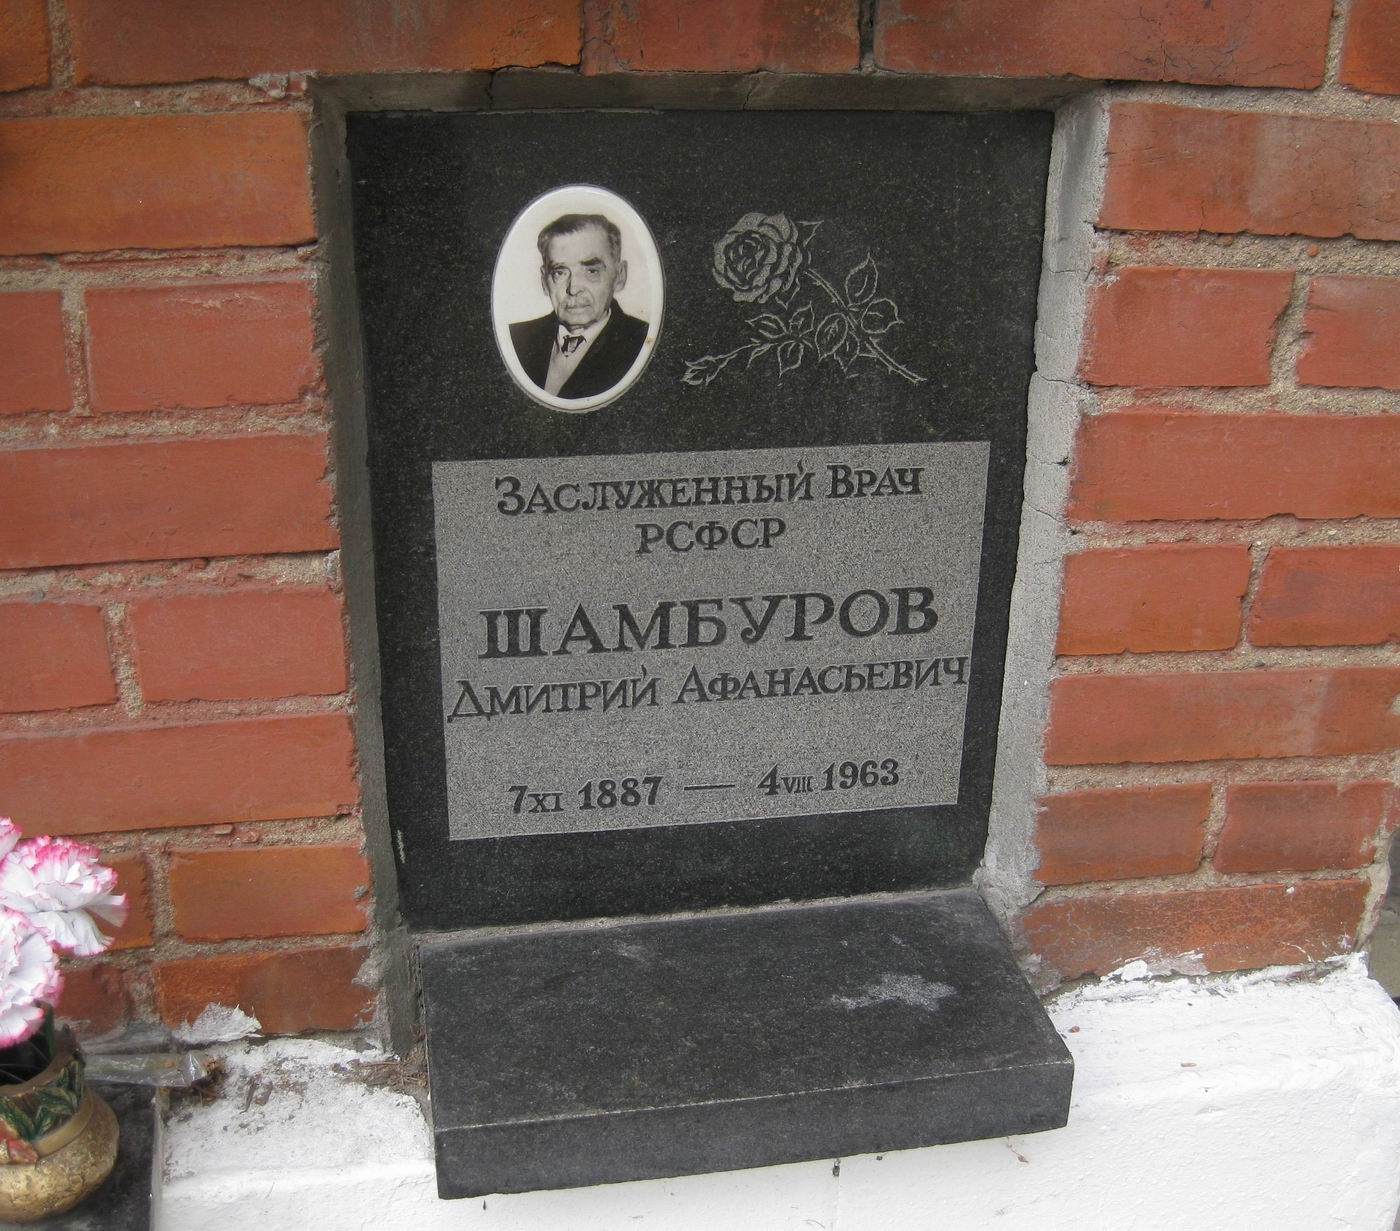 Плита на нише Шамбурова Д.А. (1887–1963), на Новодевичьем кладбище (колумбарий [125]–27–4).